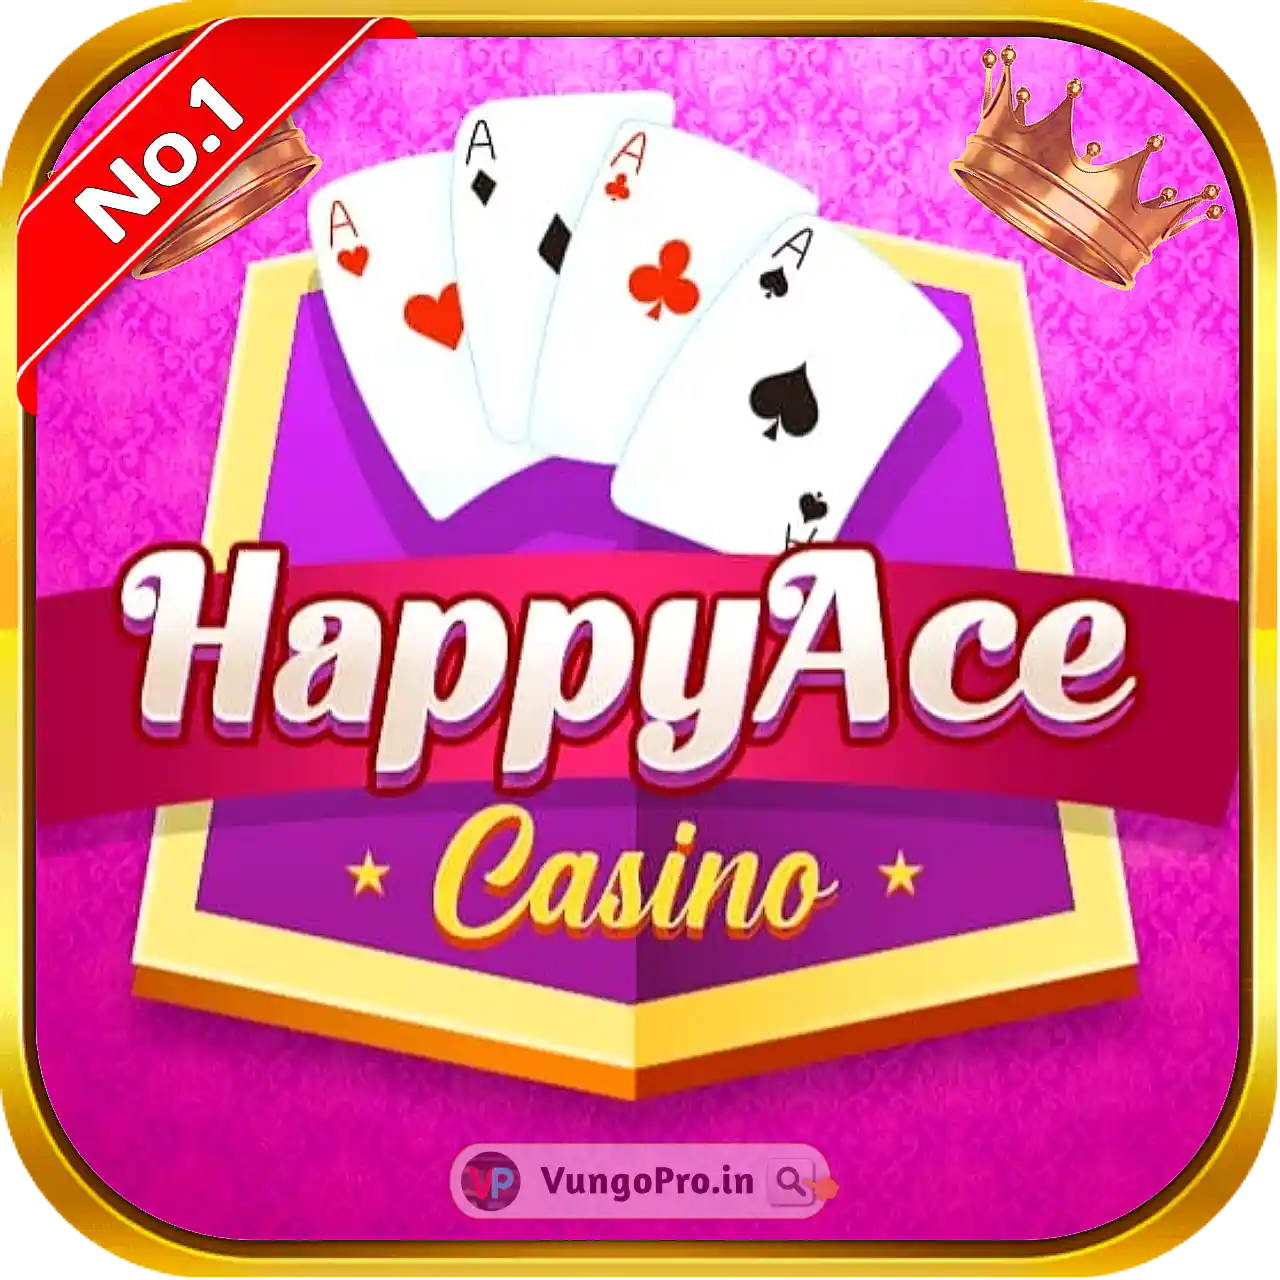 HappyAce Casino - Happy Ace Casino